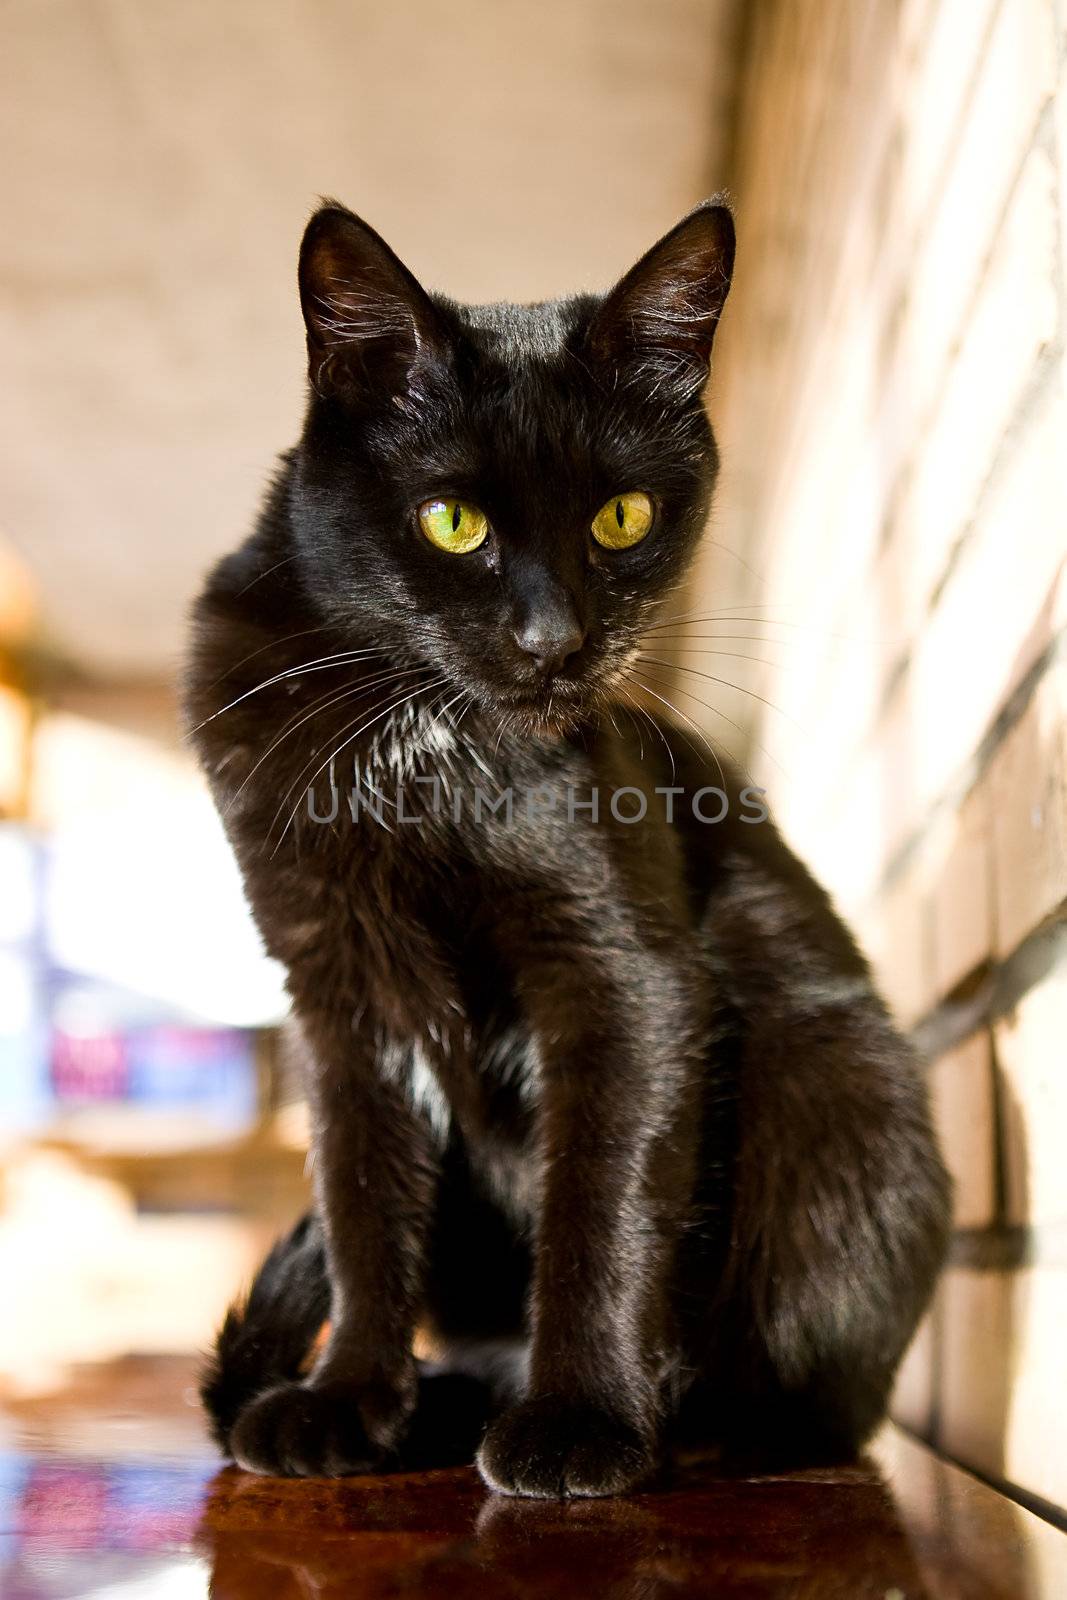 Black cat with yellow eyes sitting near brick wall